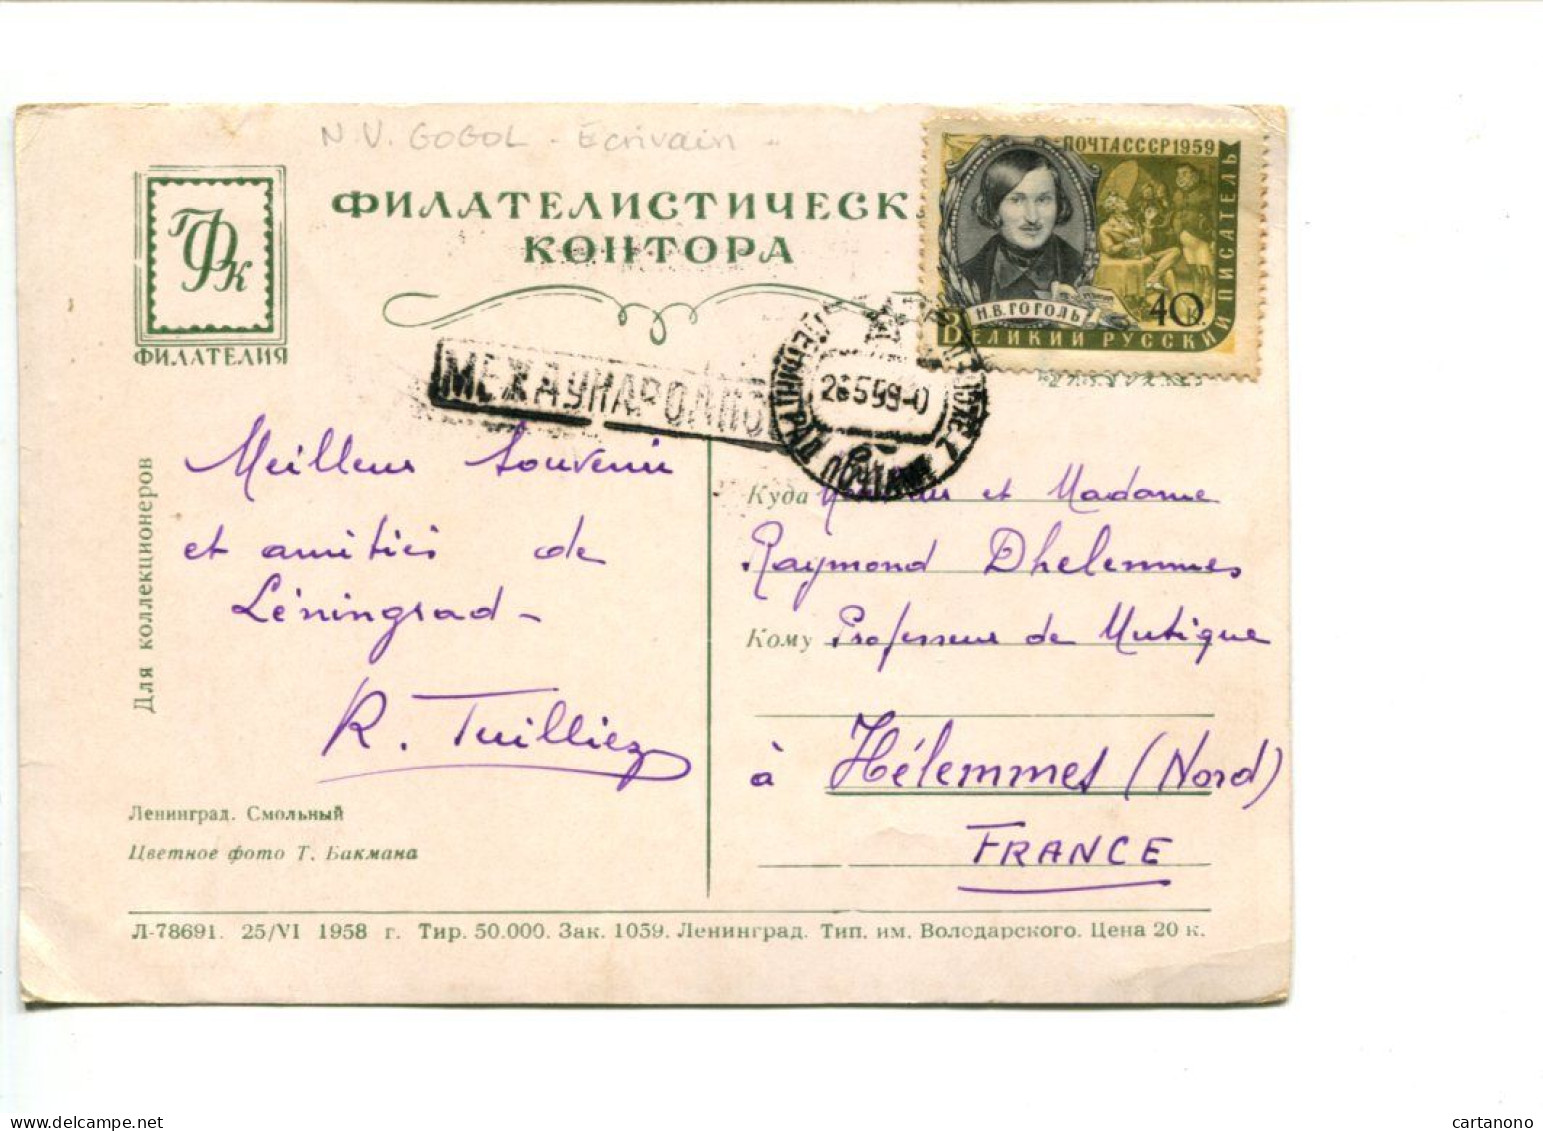 URSS - Affranchissement Sur Carte Postale - Ecrivain N.V. GOGOL - Storia Postale